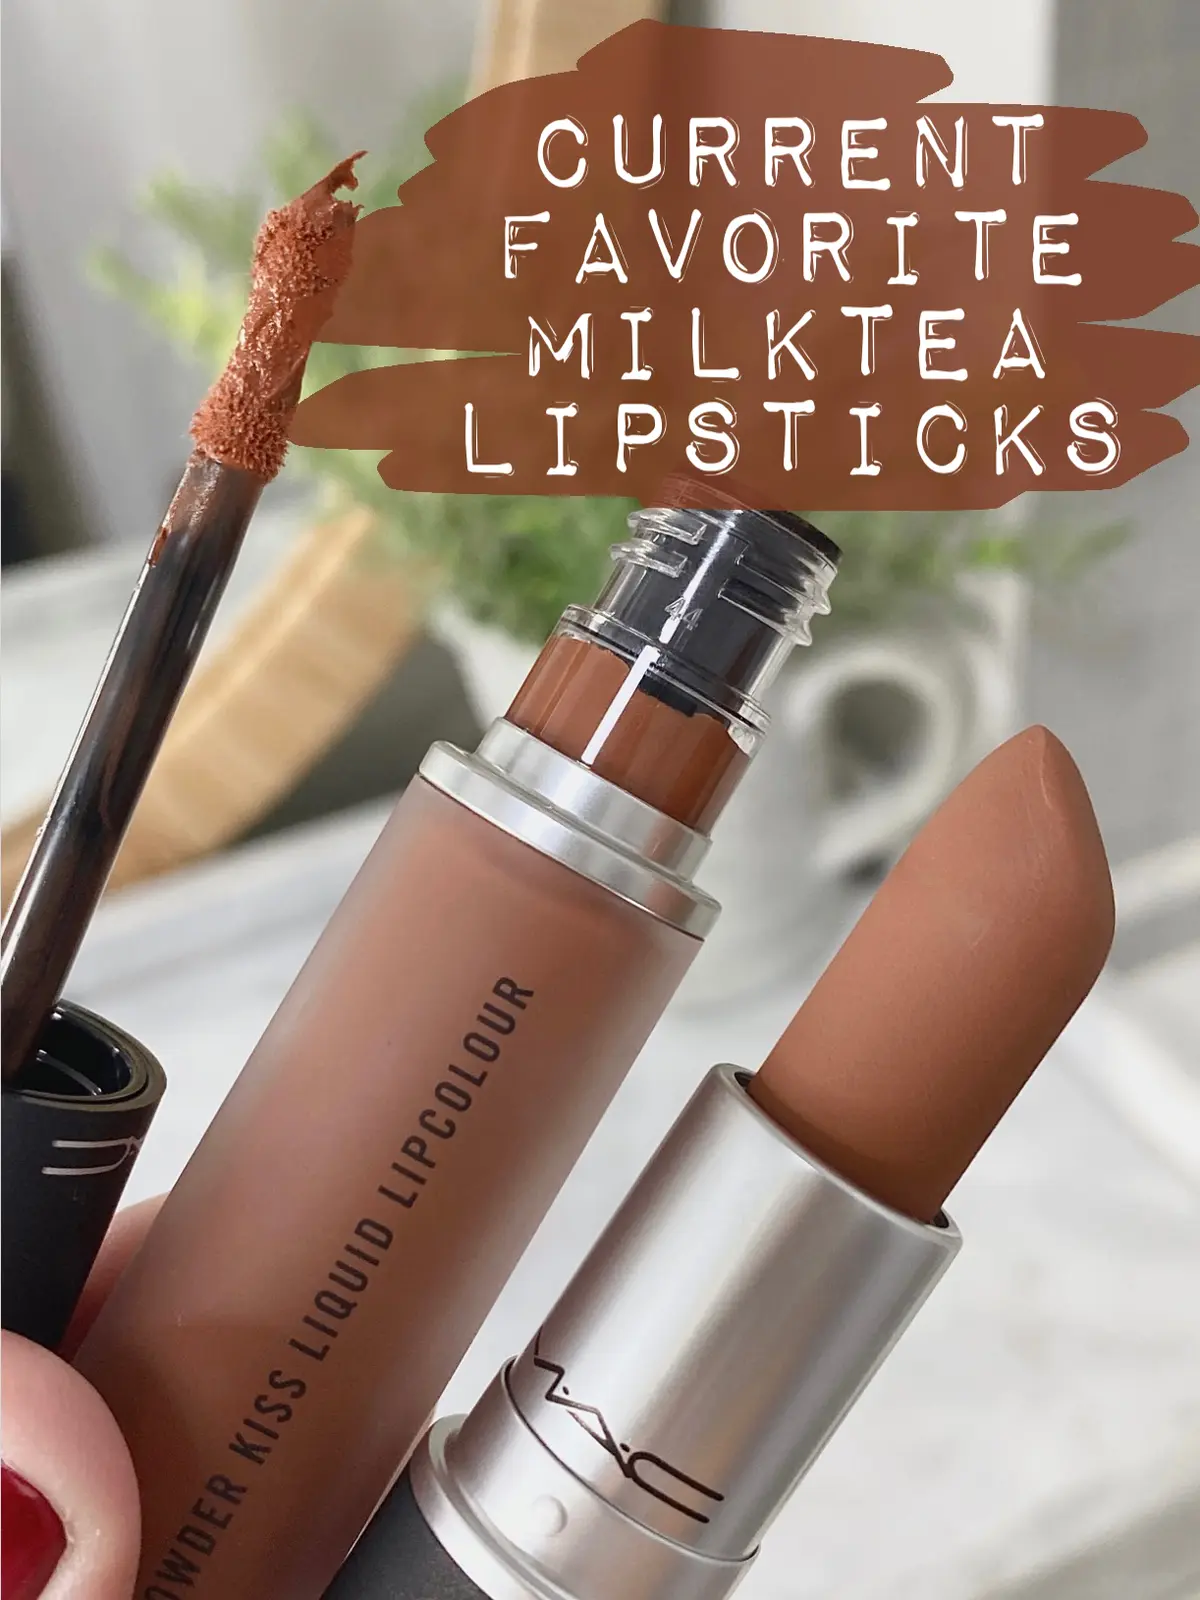 Impulsive Mac Powder Kiss Lipstick Swatch Gallery Posted By Sayheyyyy Lemon8 